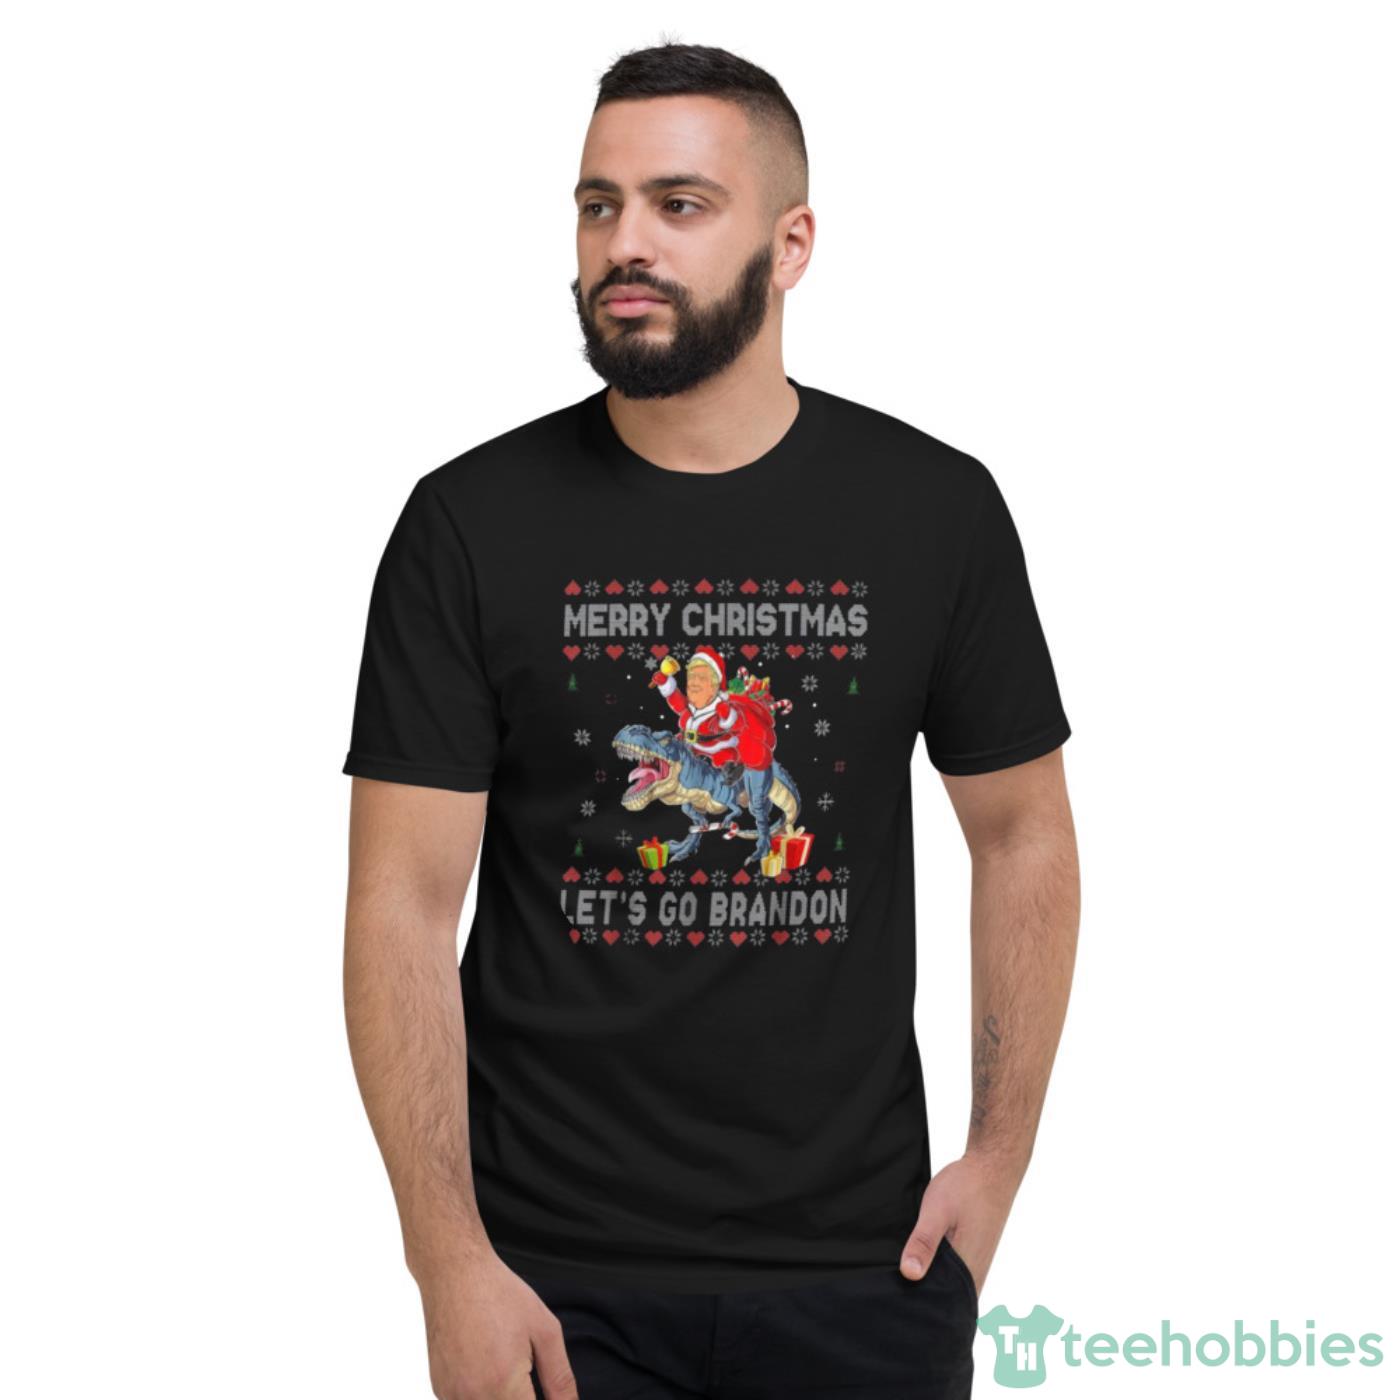 Santa Donald Trump Riding Dinosaurs Let’s Go Brandon Ugly Merry Christmas Shirt Cute Gift - Short Sleeve T-Shirt